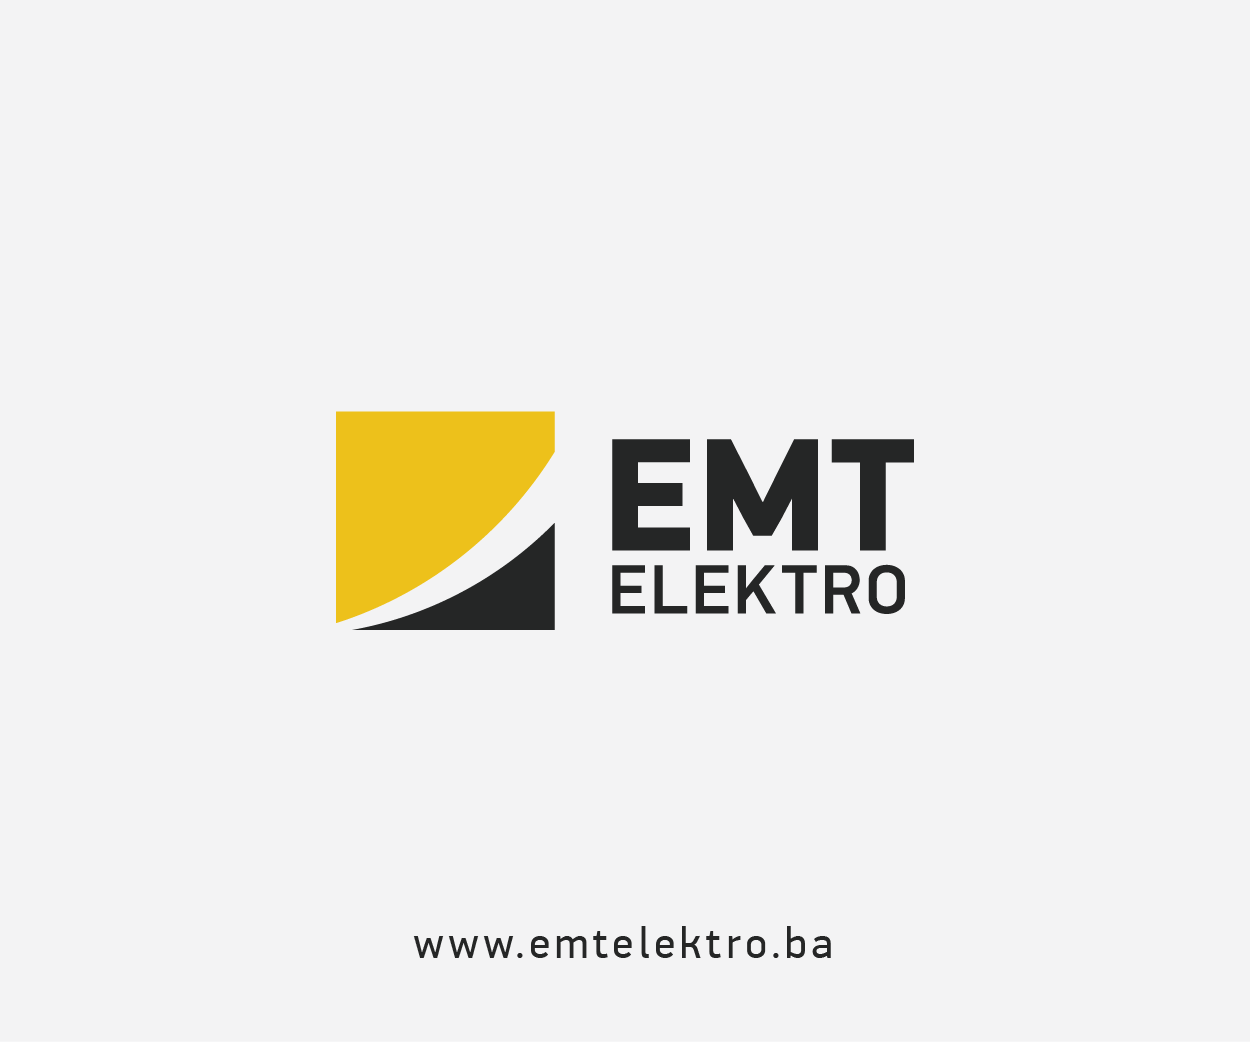 EMT elektro an engineering company Logo Design Image